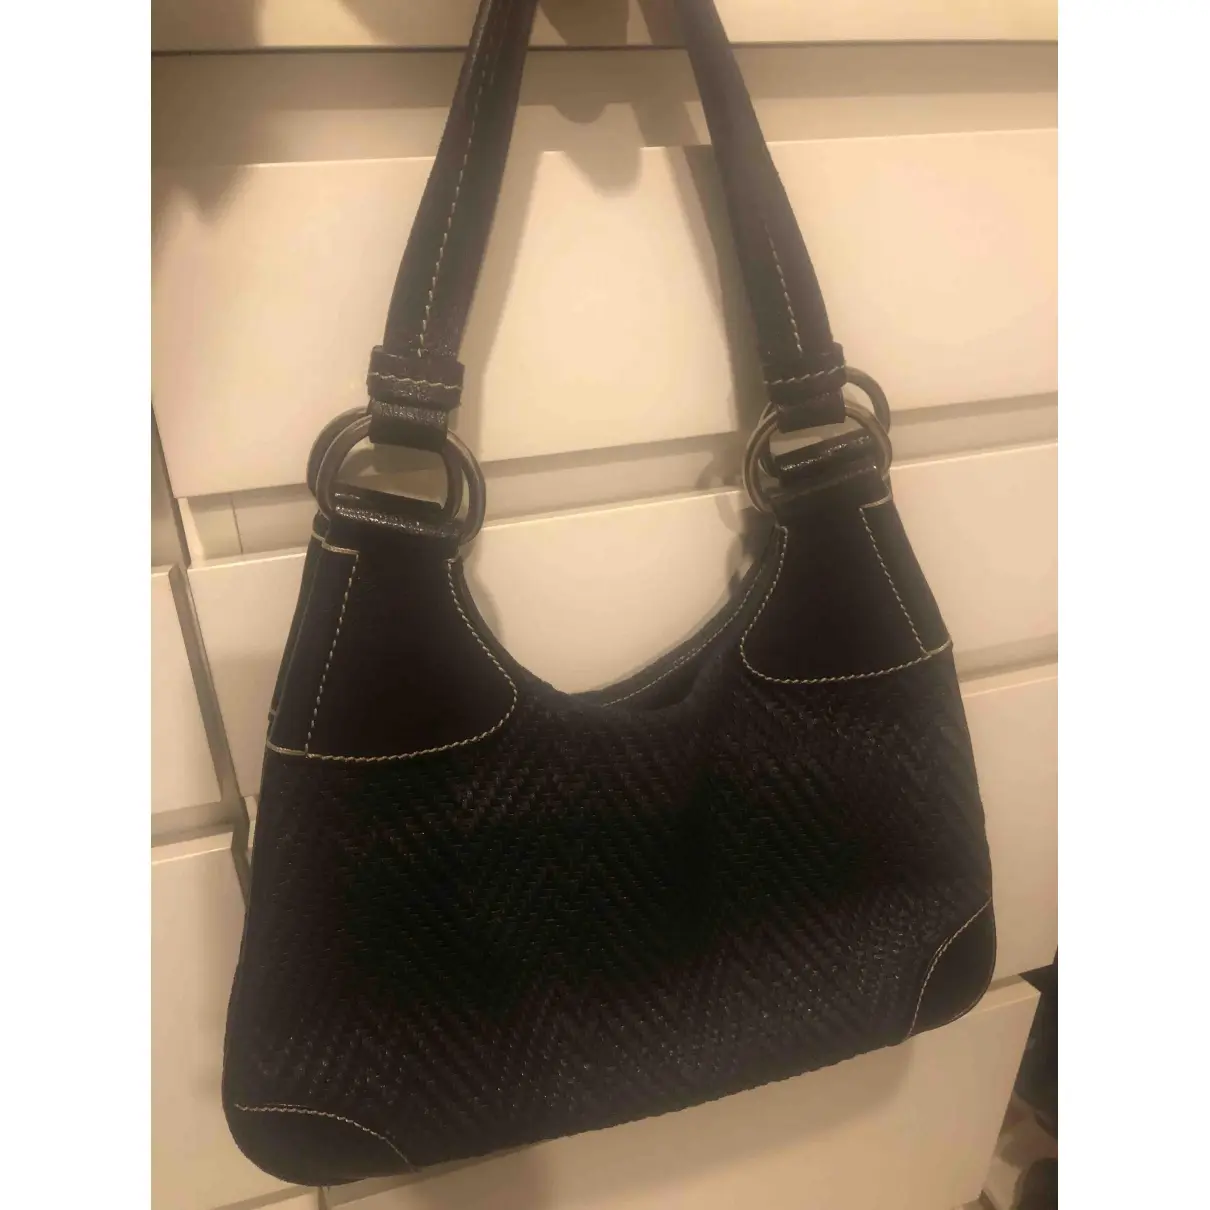 Prada Leather handbag for sale - Vintage